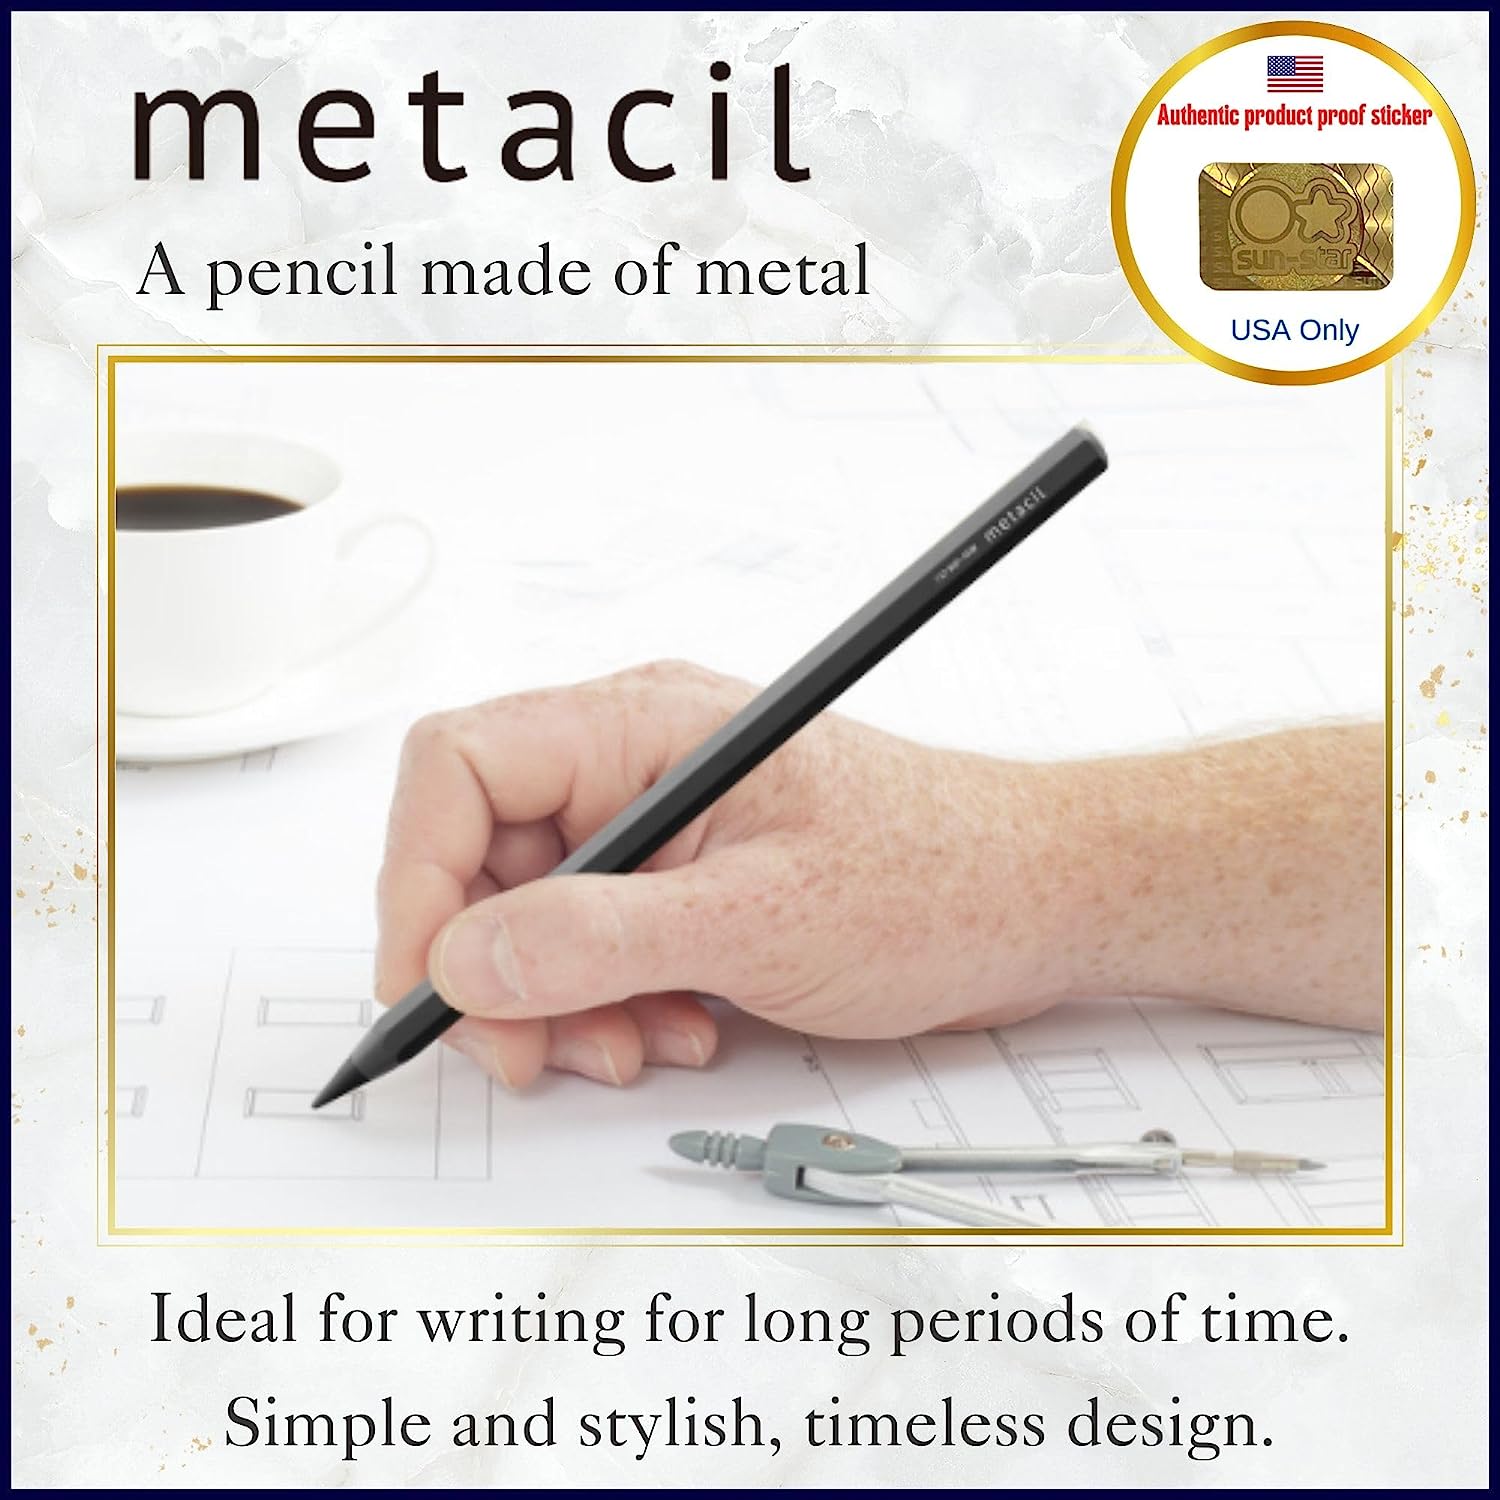 Sun-Star Metal Pencils (Metacil) – Everything Calligraphy